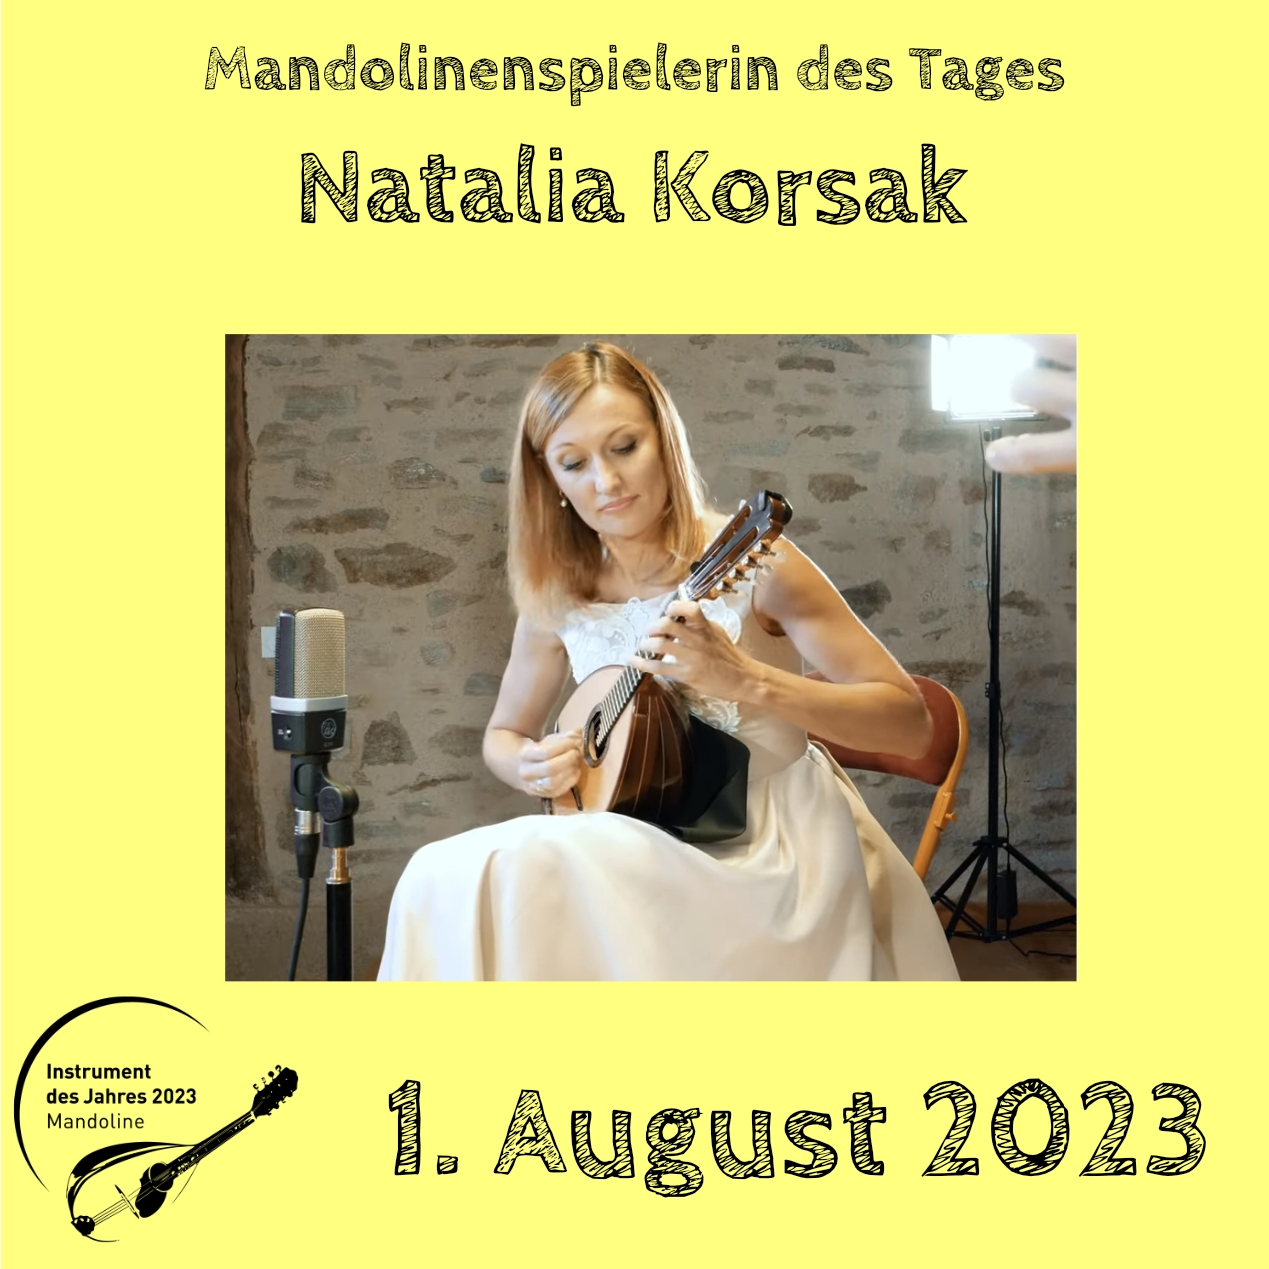 1. August - Natalia Korsak Mandoline Instrument des Jahres 2023 Mandolinenspieler Mandolinenspielerin des Tages